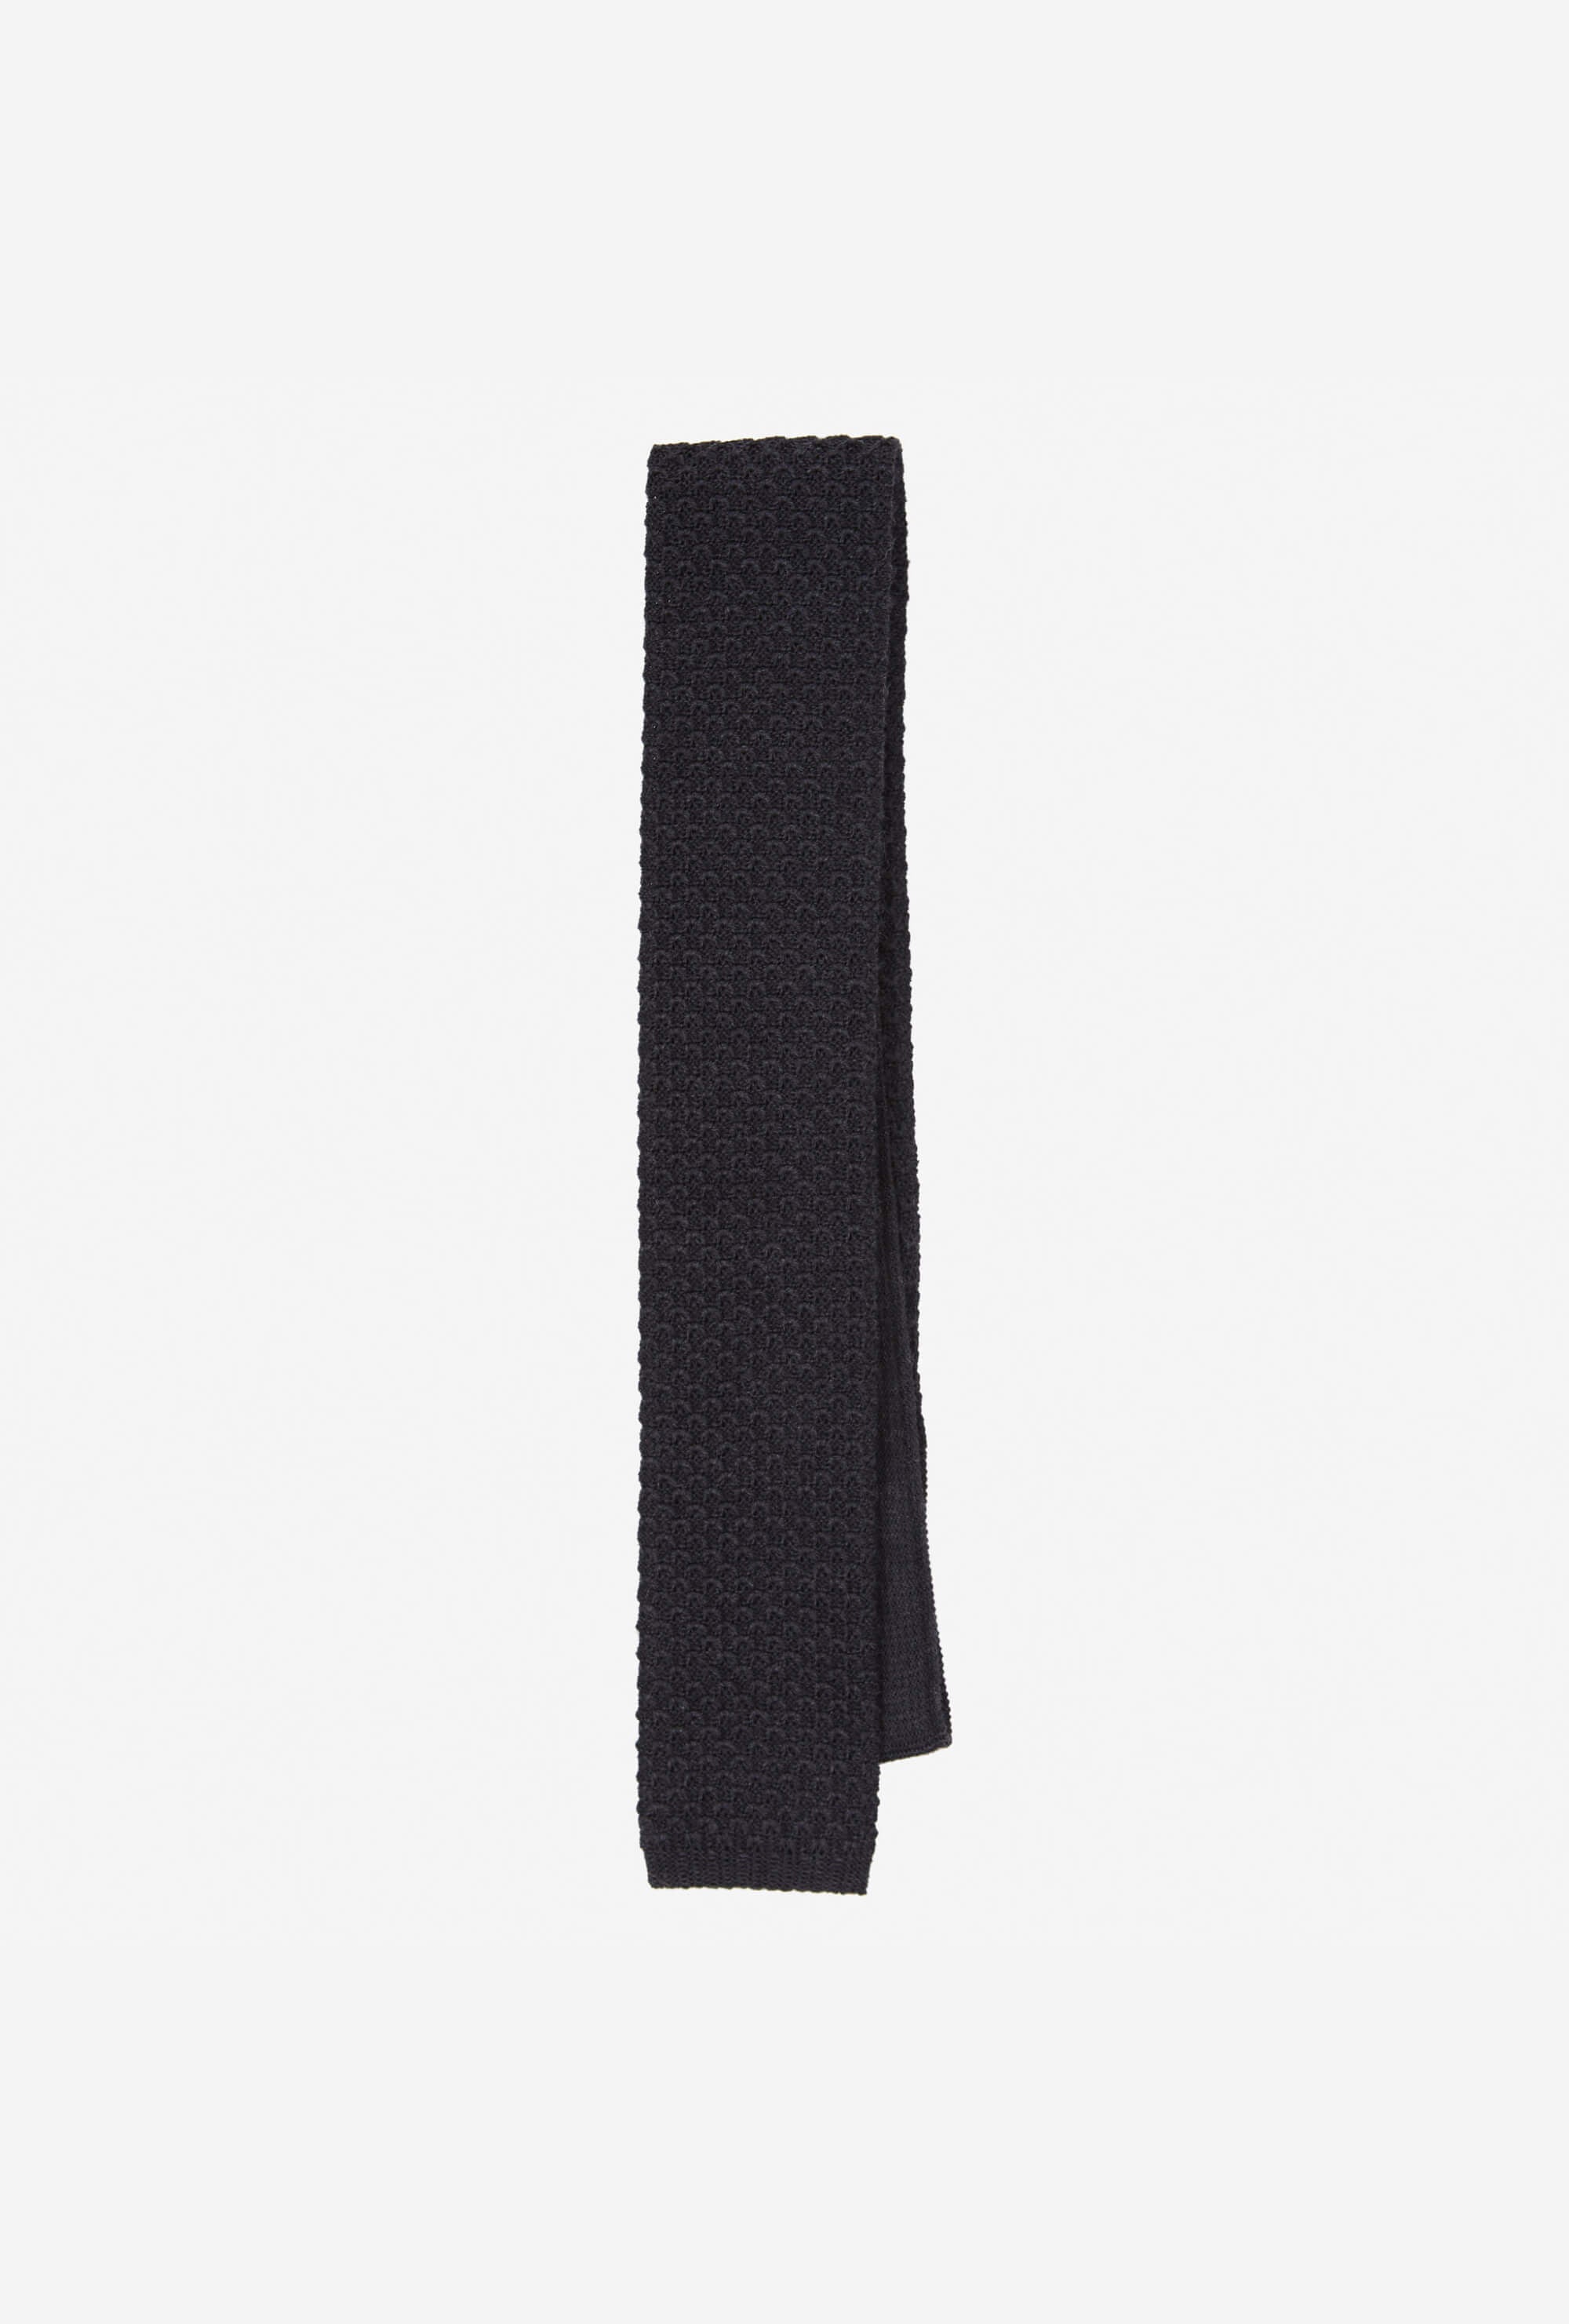 Knit Tie Wool Charcoal